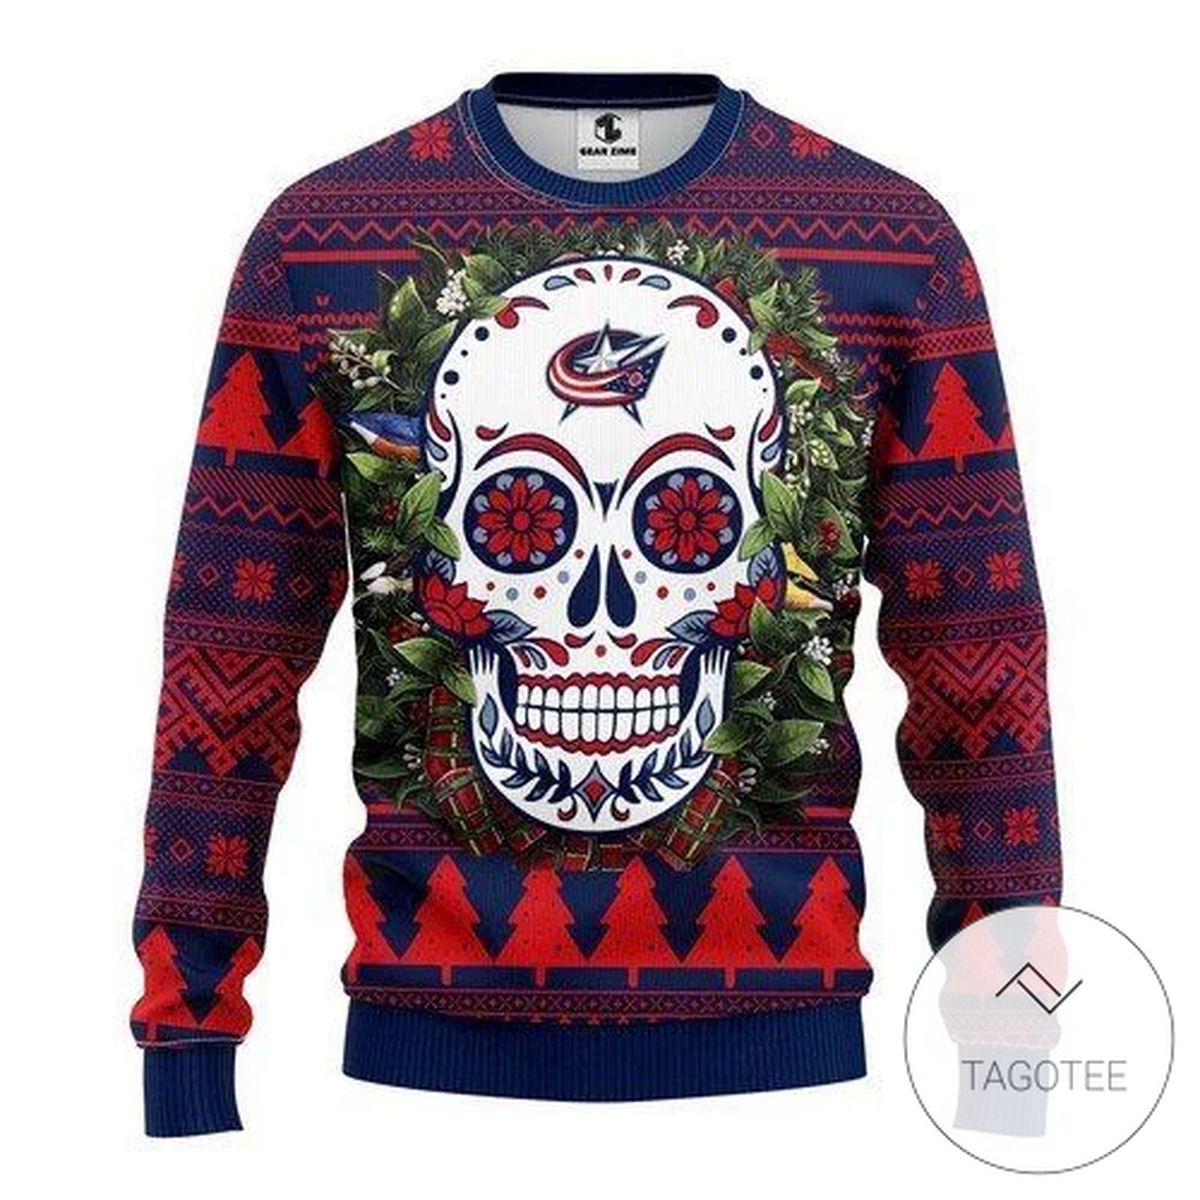 Columbus Blue Jackets Skull Flower Sweatshirt Knitted Ugly Christmas Sweater